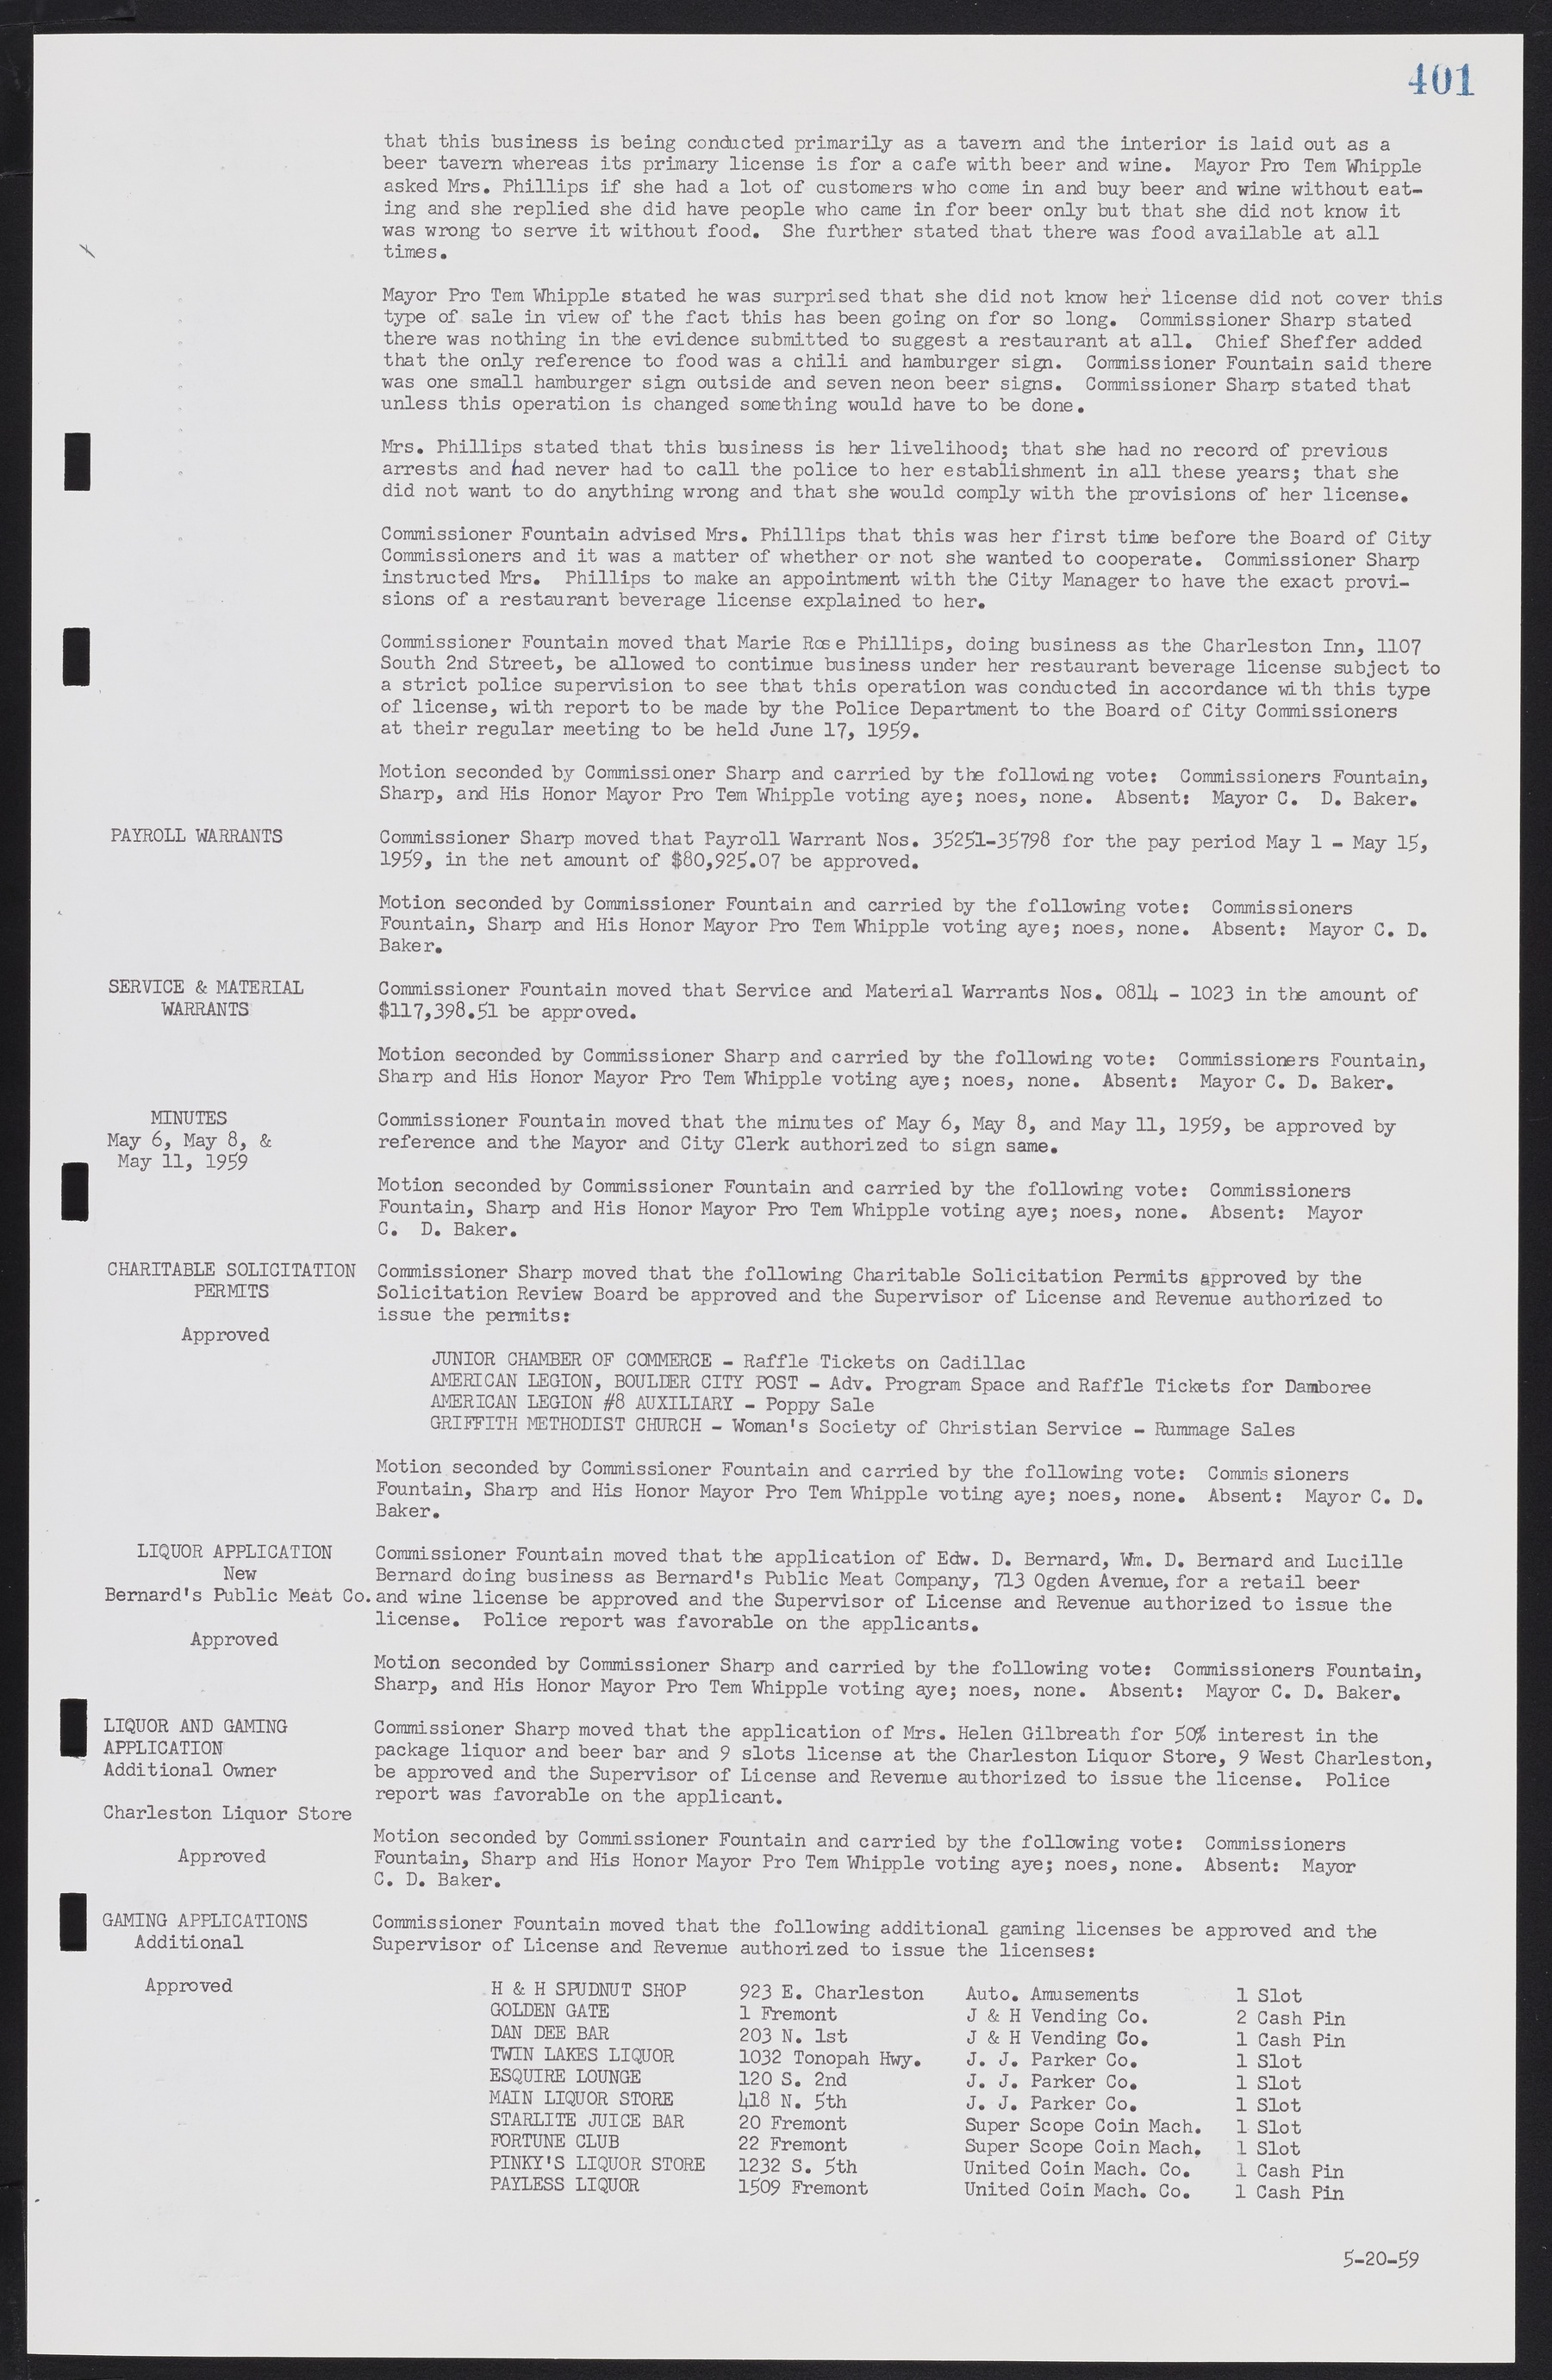 Las Vegas City Commission Minutes, November 20, 1957 to December 2, 1959, lvc000011-437